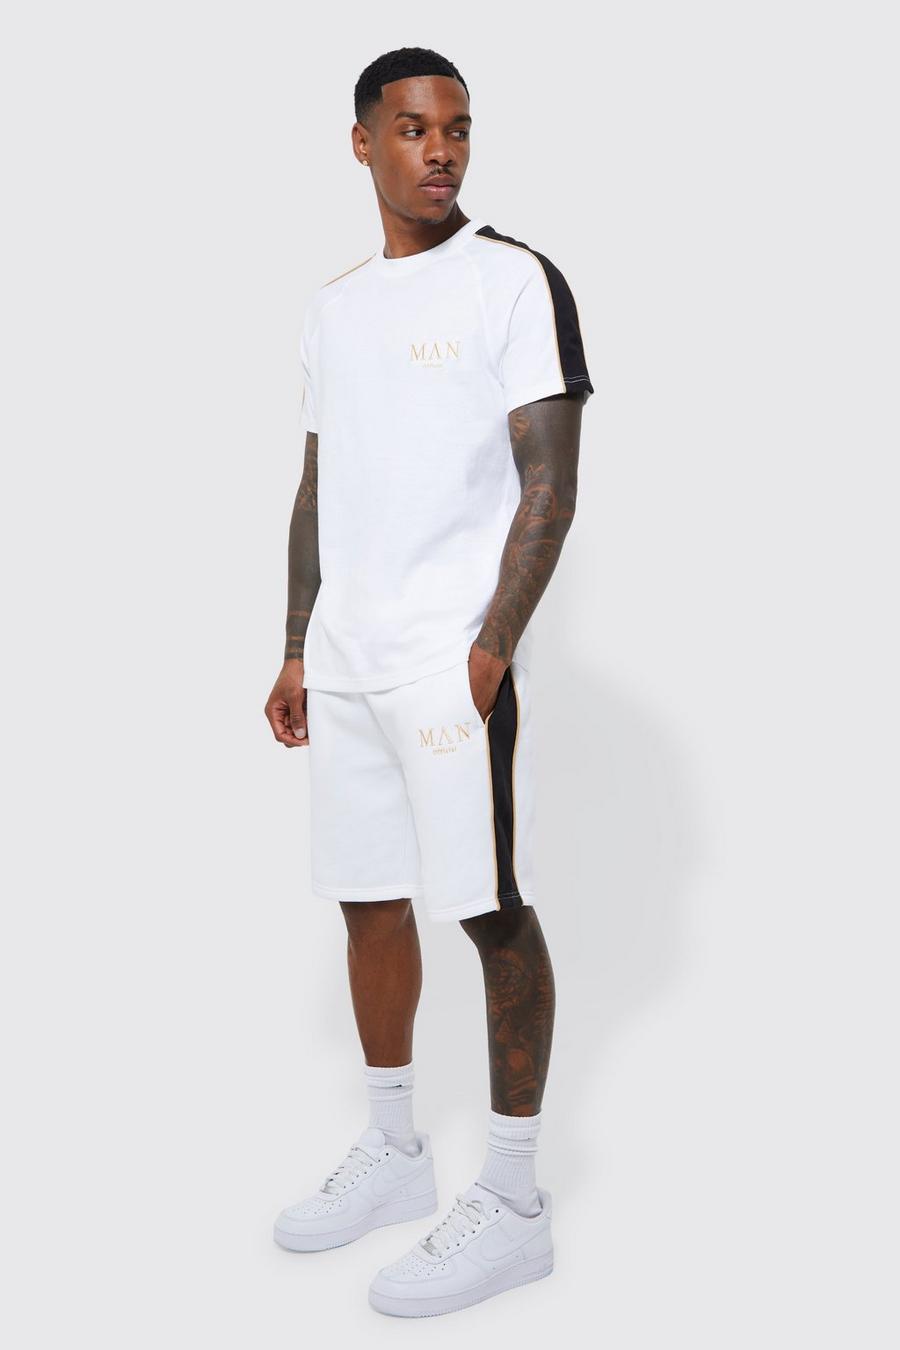 Man Gold Shorts-Set mit Paspeln, White